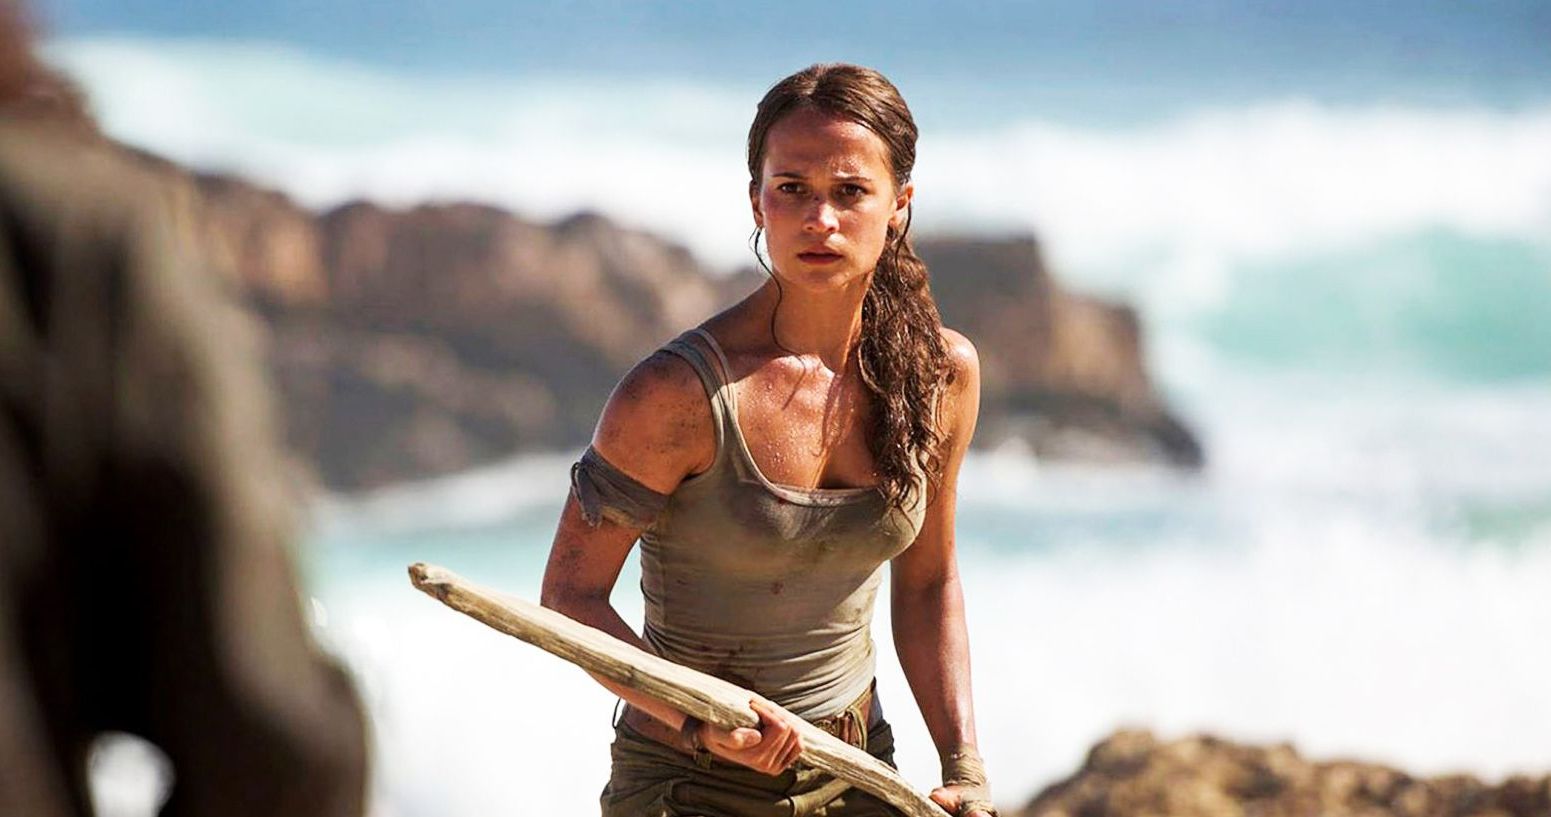 Alicia Vikander Shares New Update on Tomb Raider 2